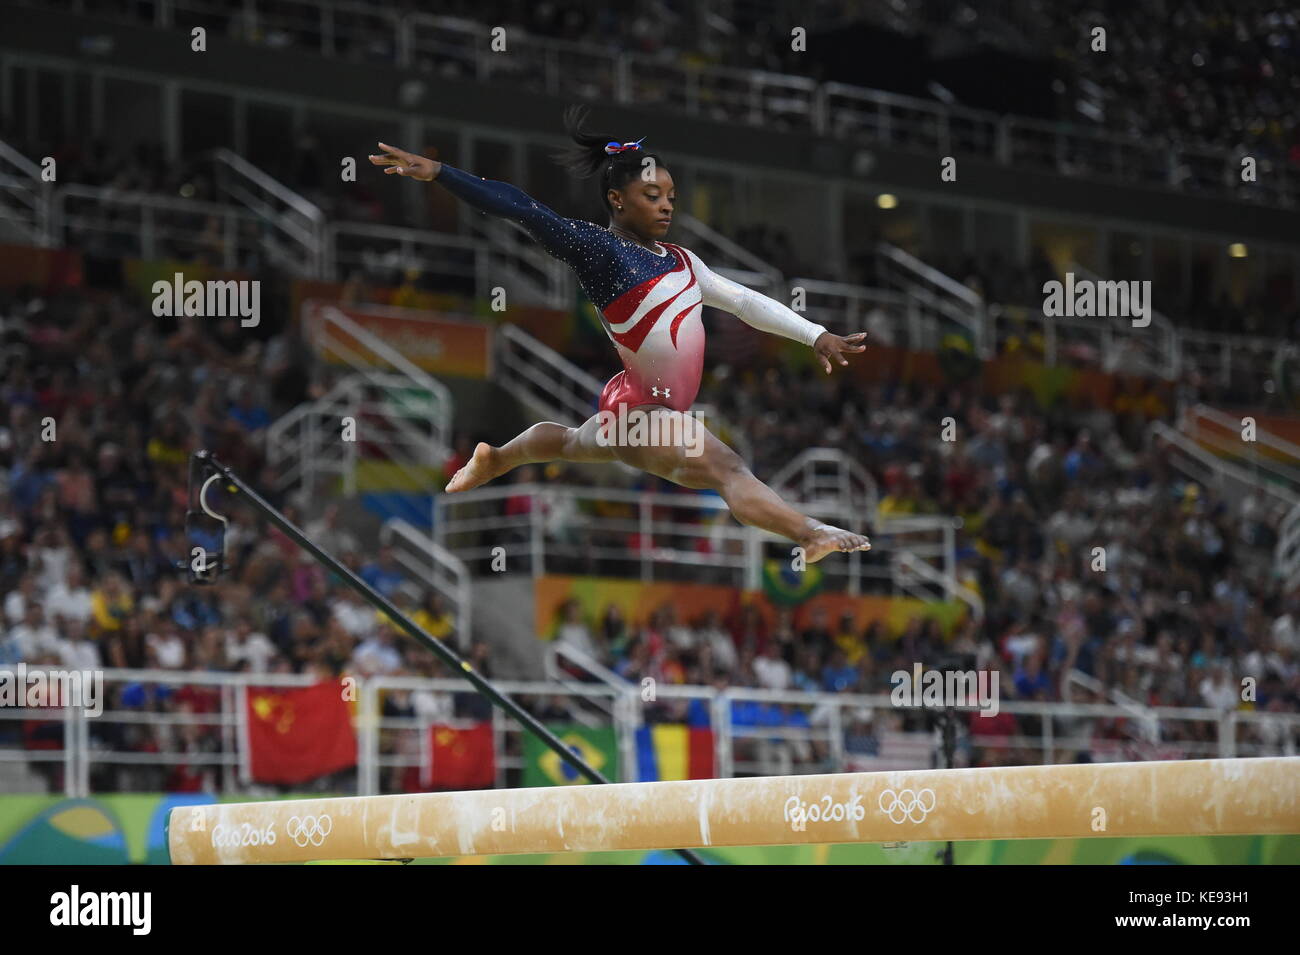 Rio de Janeiro-Brazil July 31, 2016 Team USA Olympic Gymnastic (Simone Biles ) in Olympic Games 2016 Stock Photo